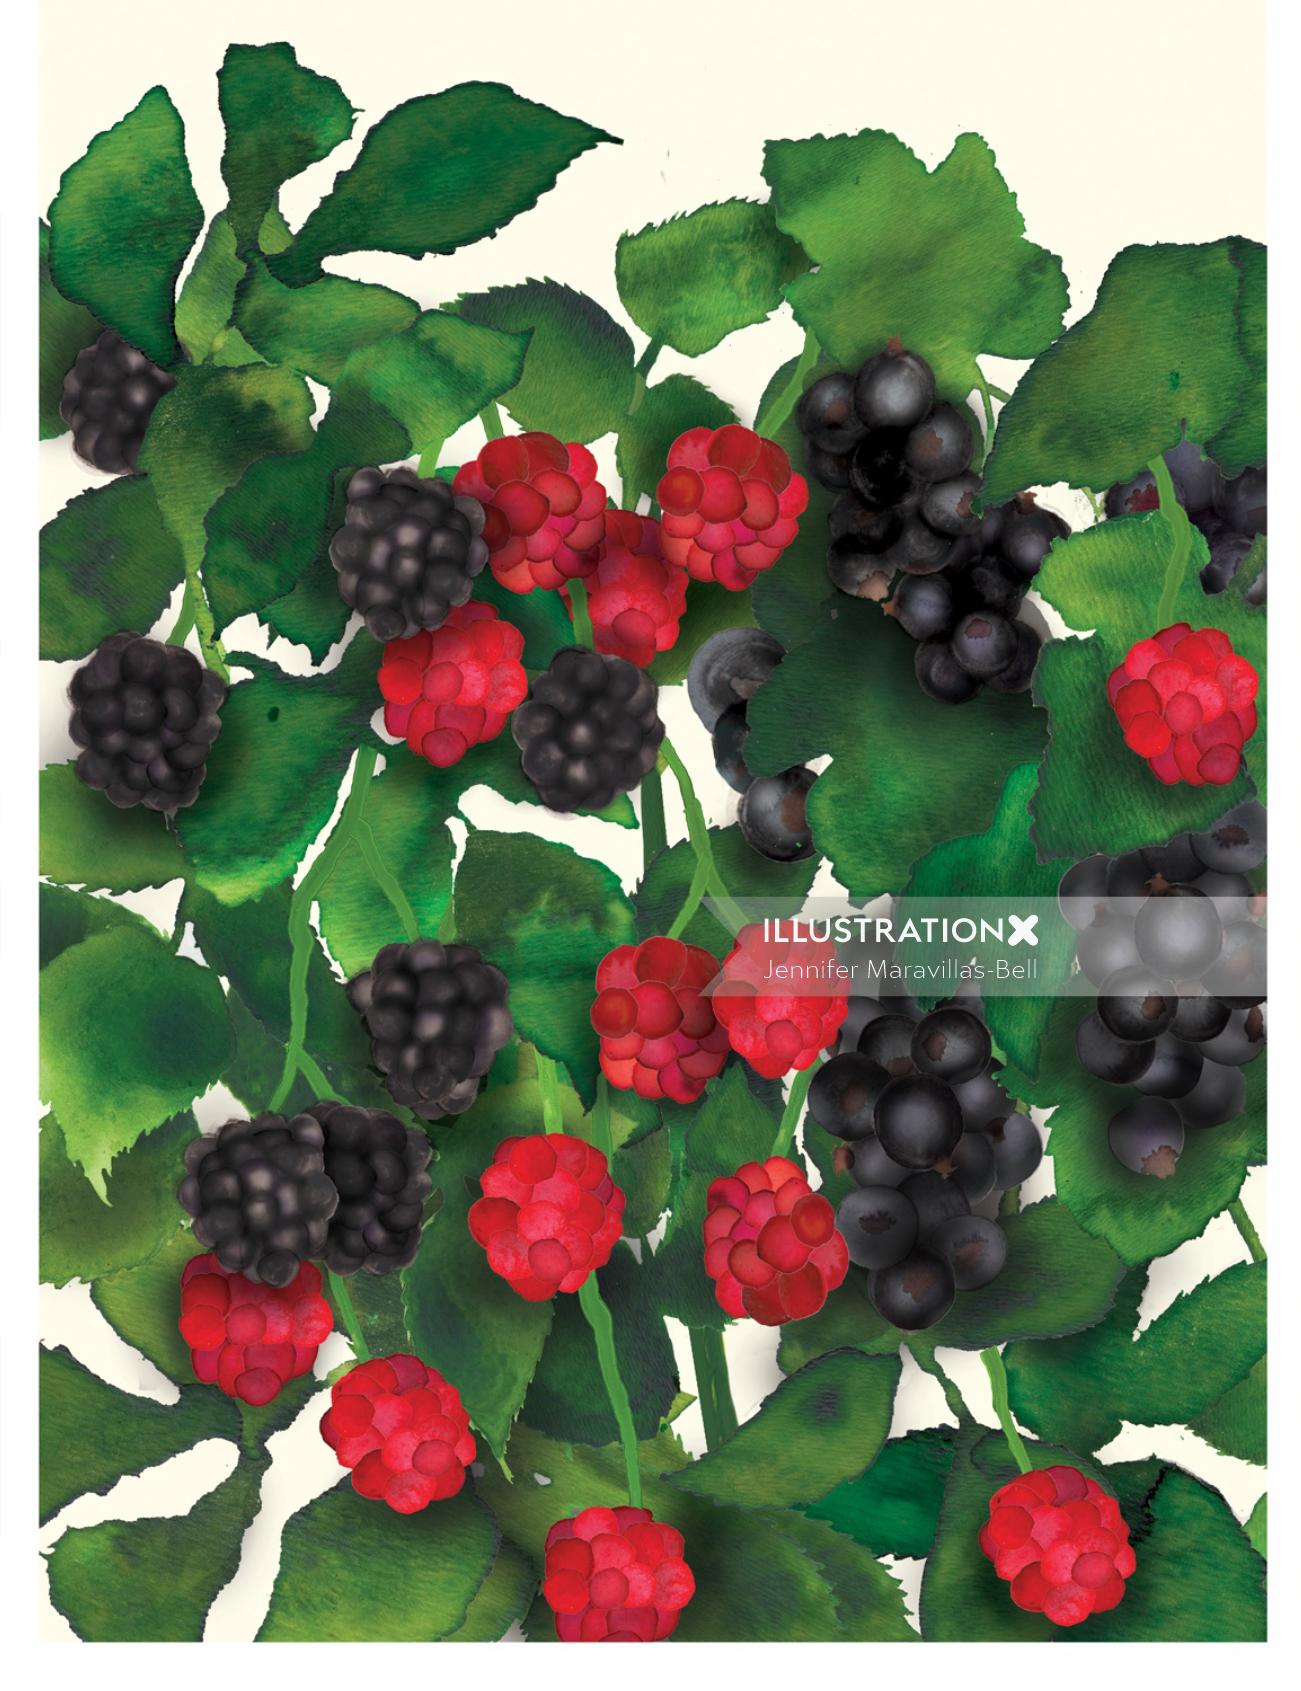 Grapes and strawberry tree illustration by Jennifer Maravillas